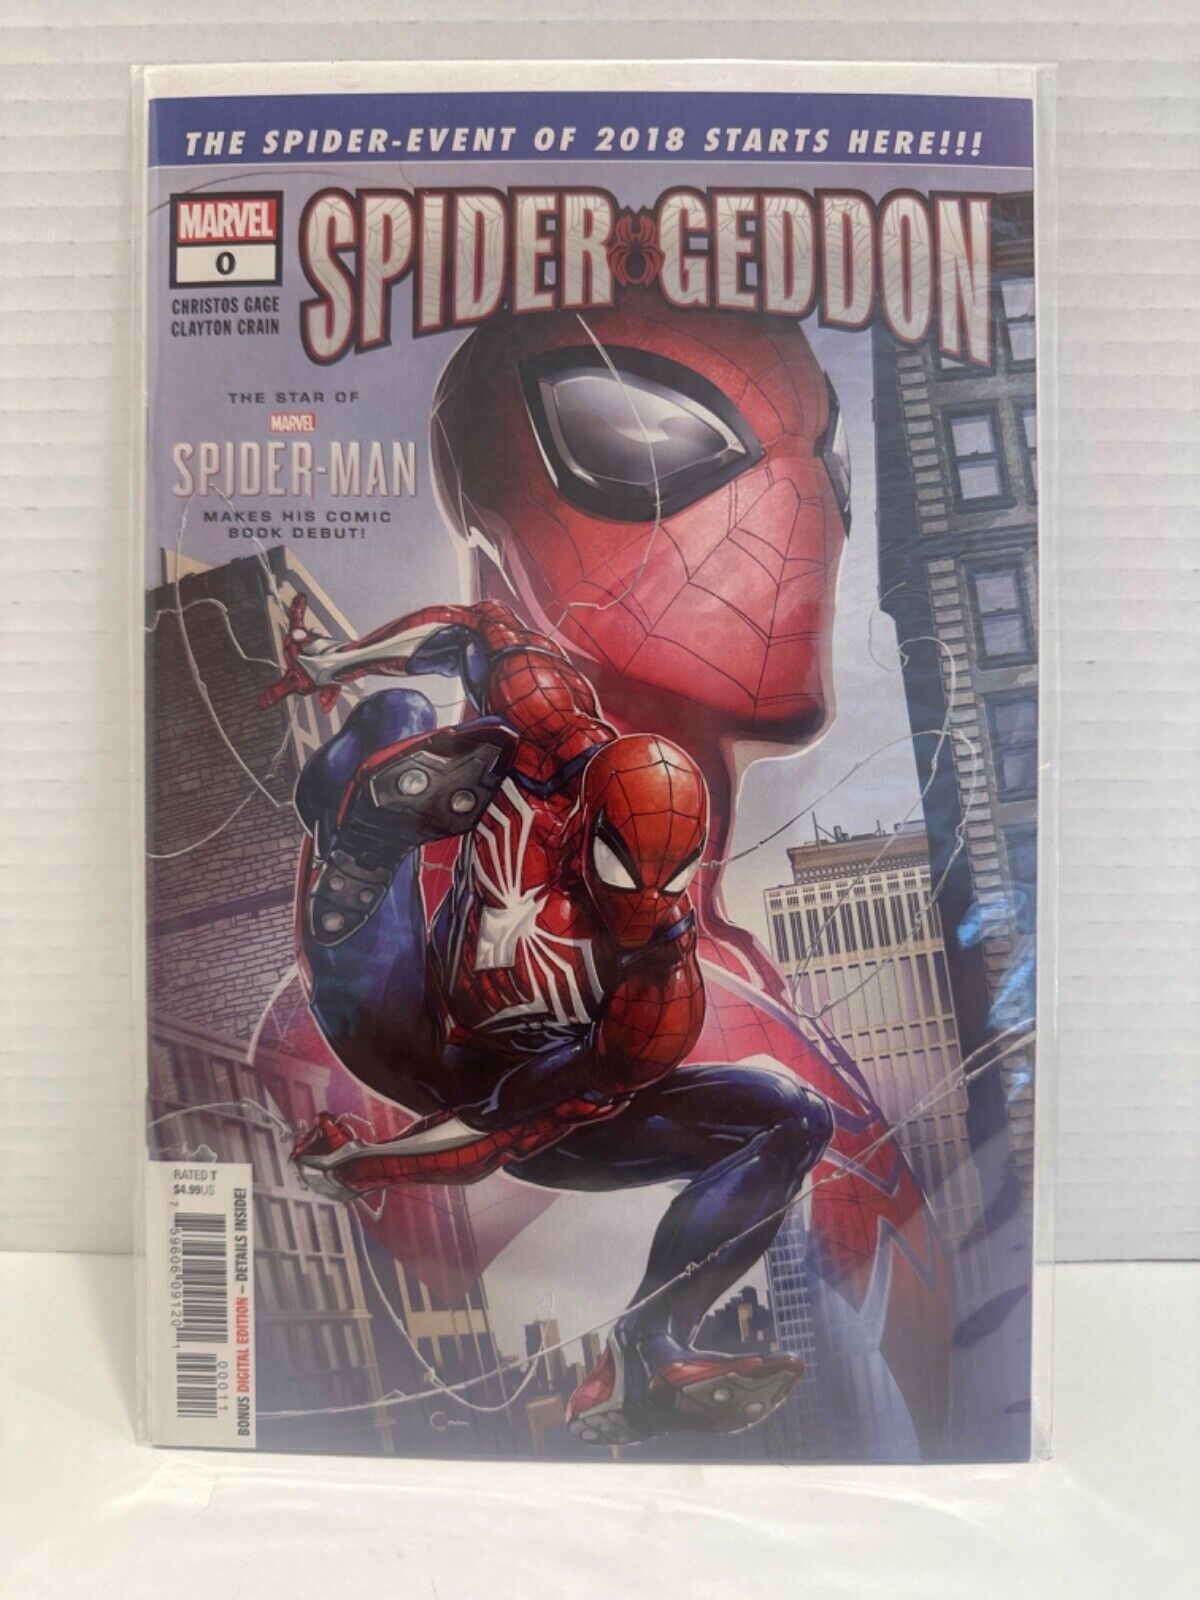 Spider-geddon #0 first printing 2018 Marvel Comic Book 1st Spiderman PS4